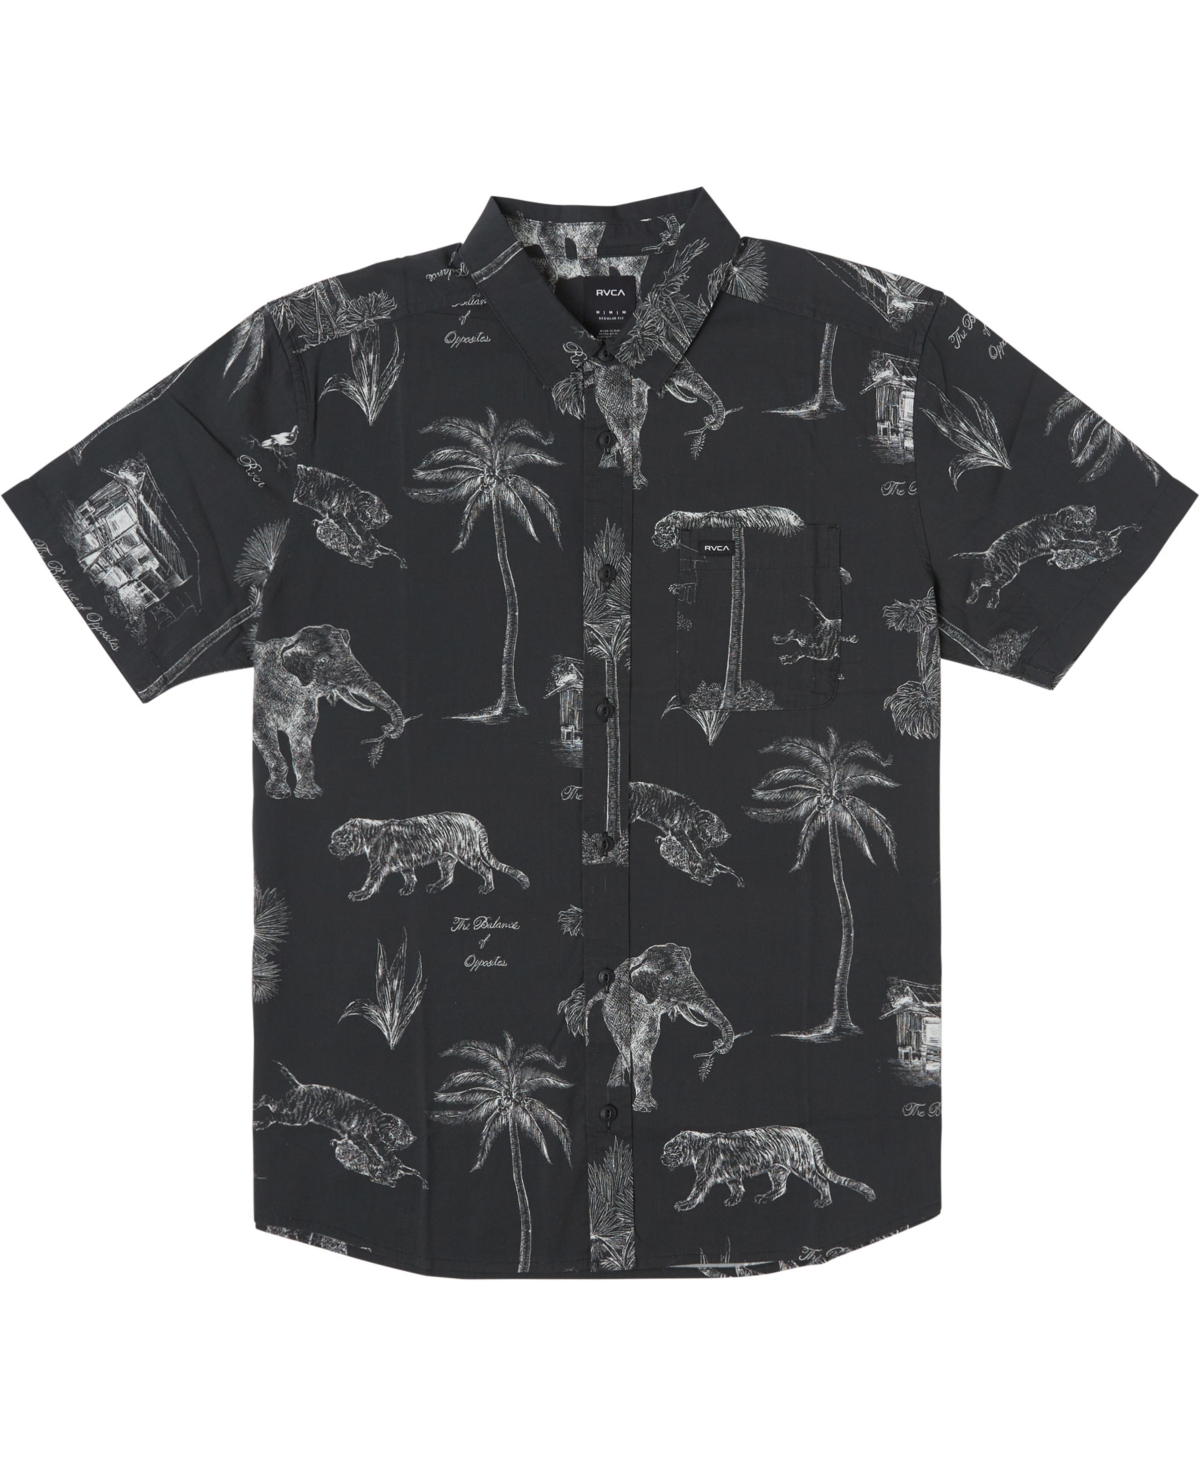 Men's Tropic Winds Short Sleeve Shirt - Black